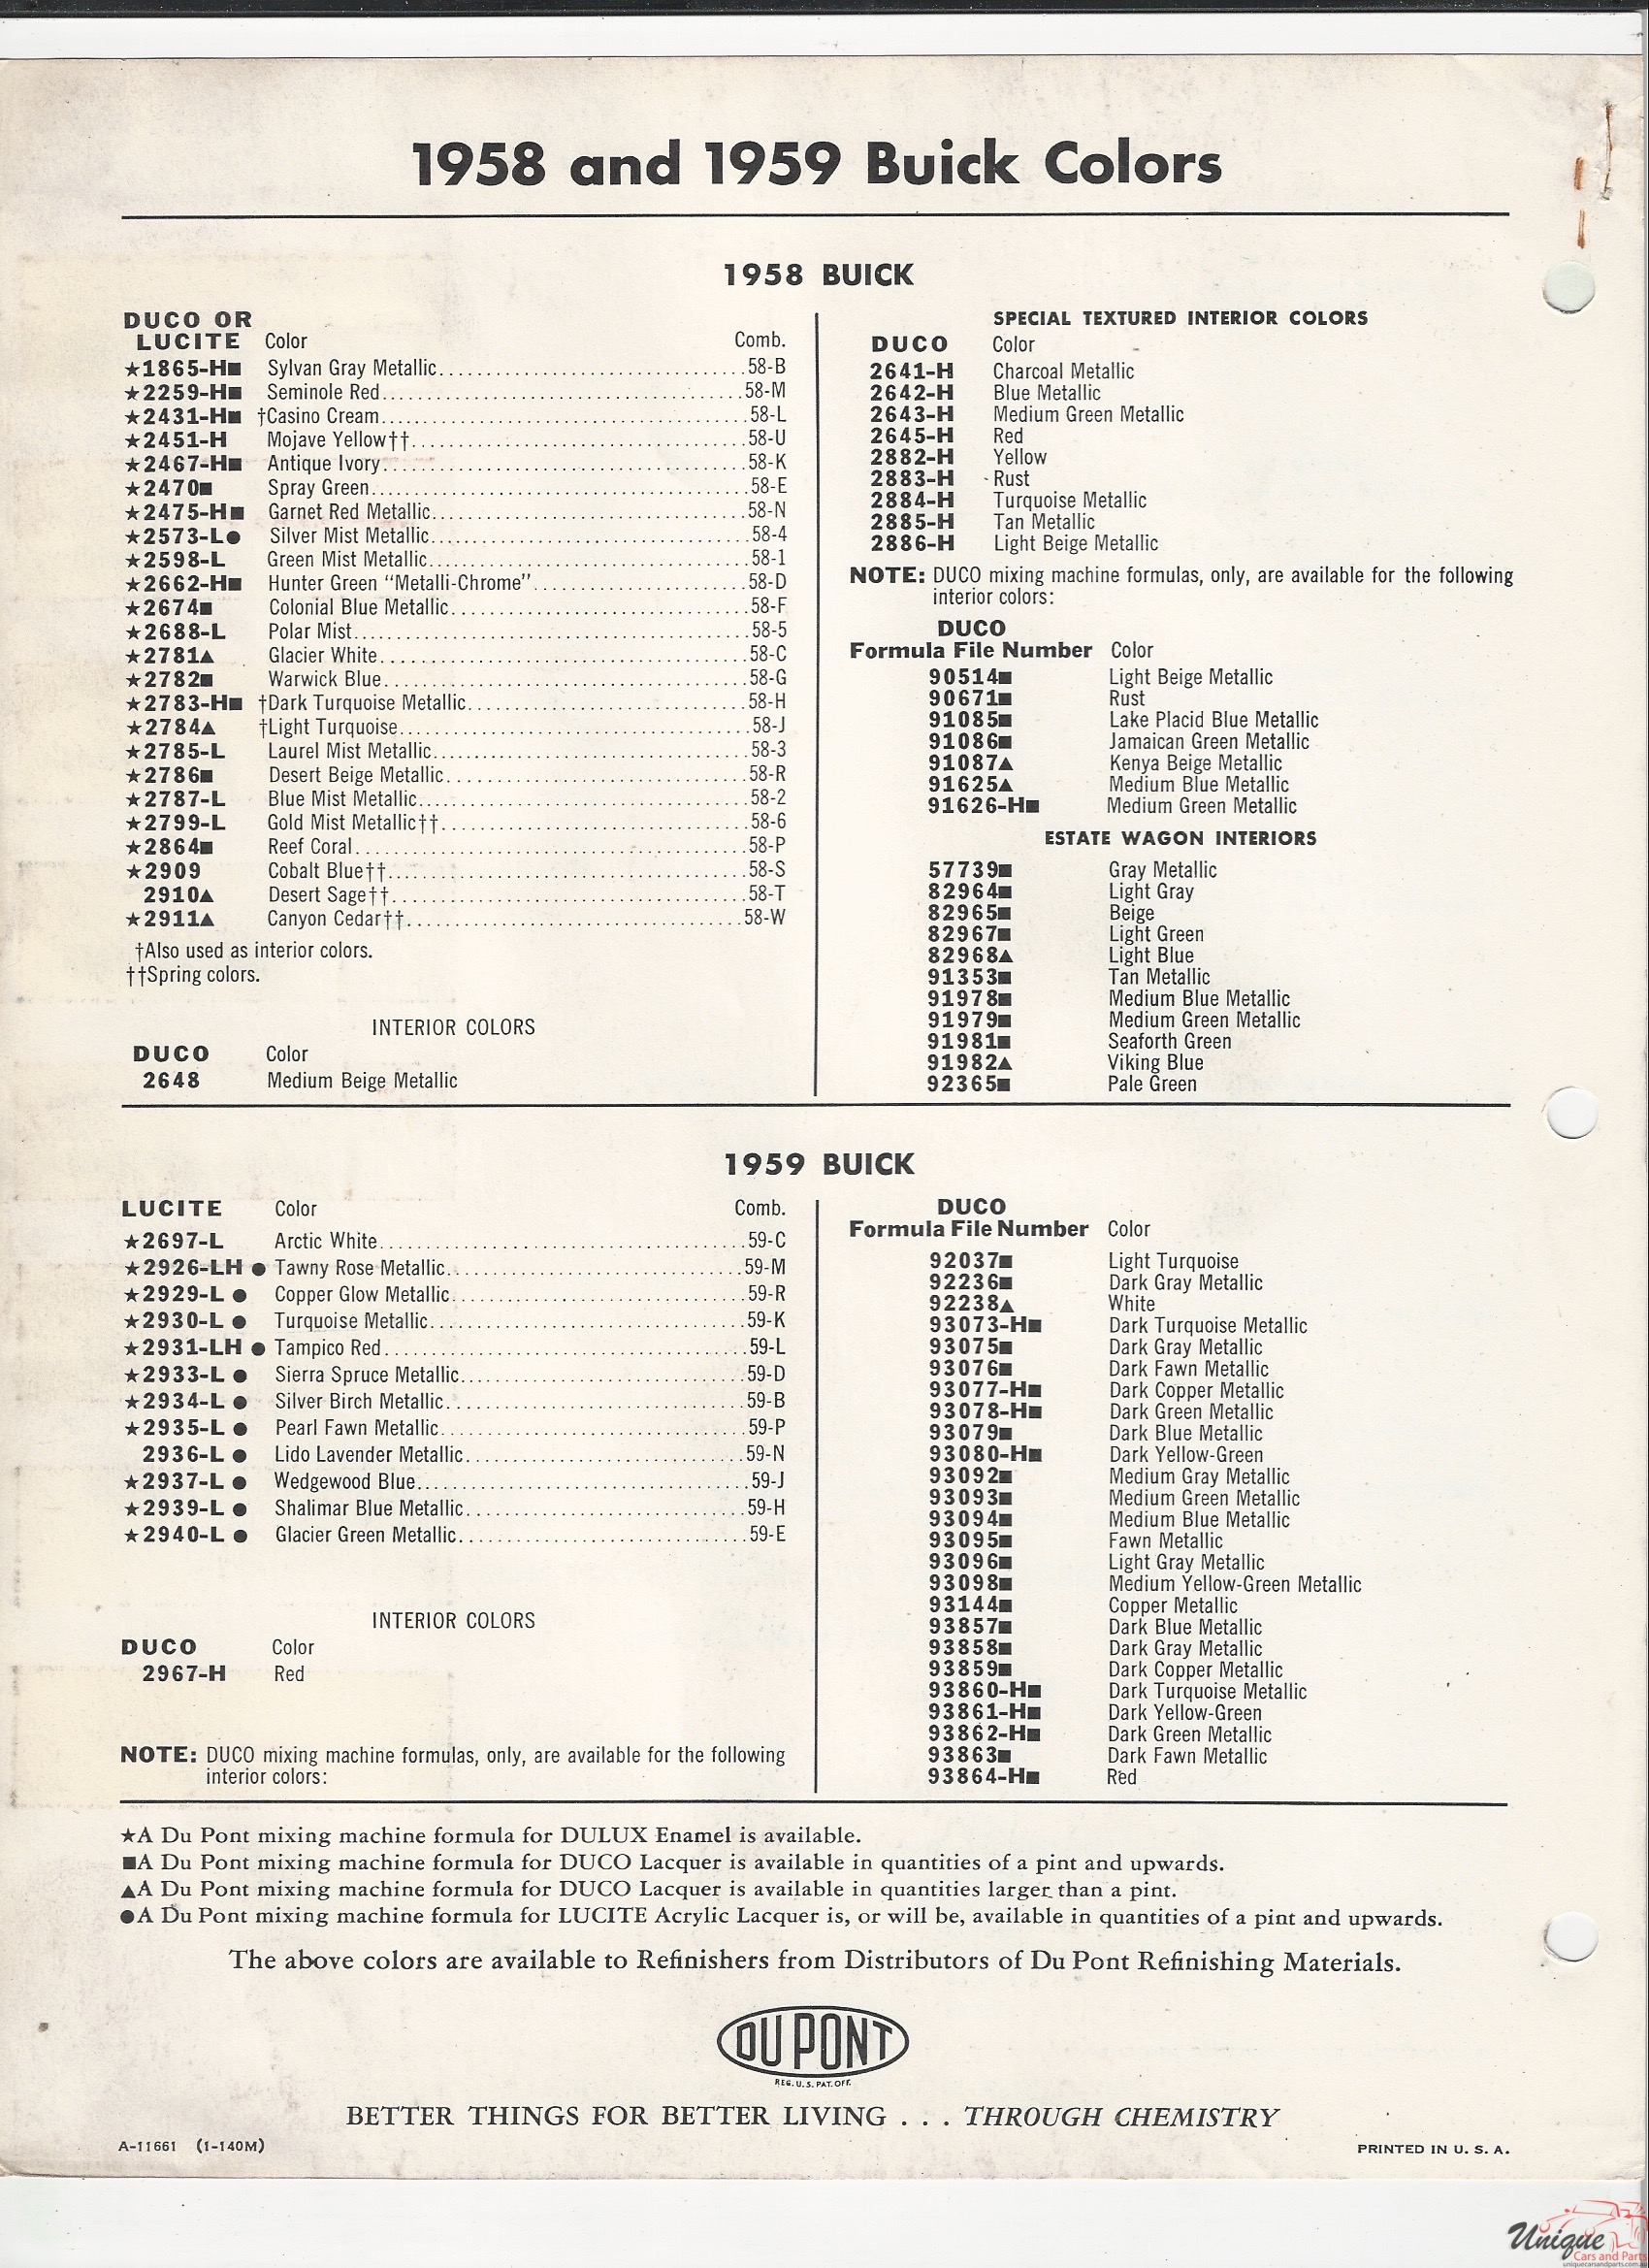 1960 Buick-3 Paint Charts